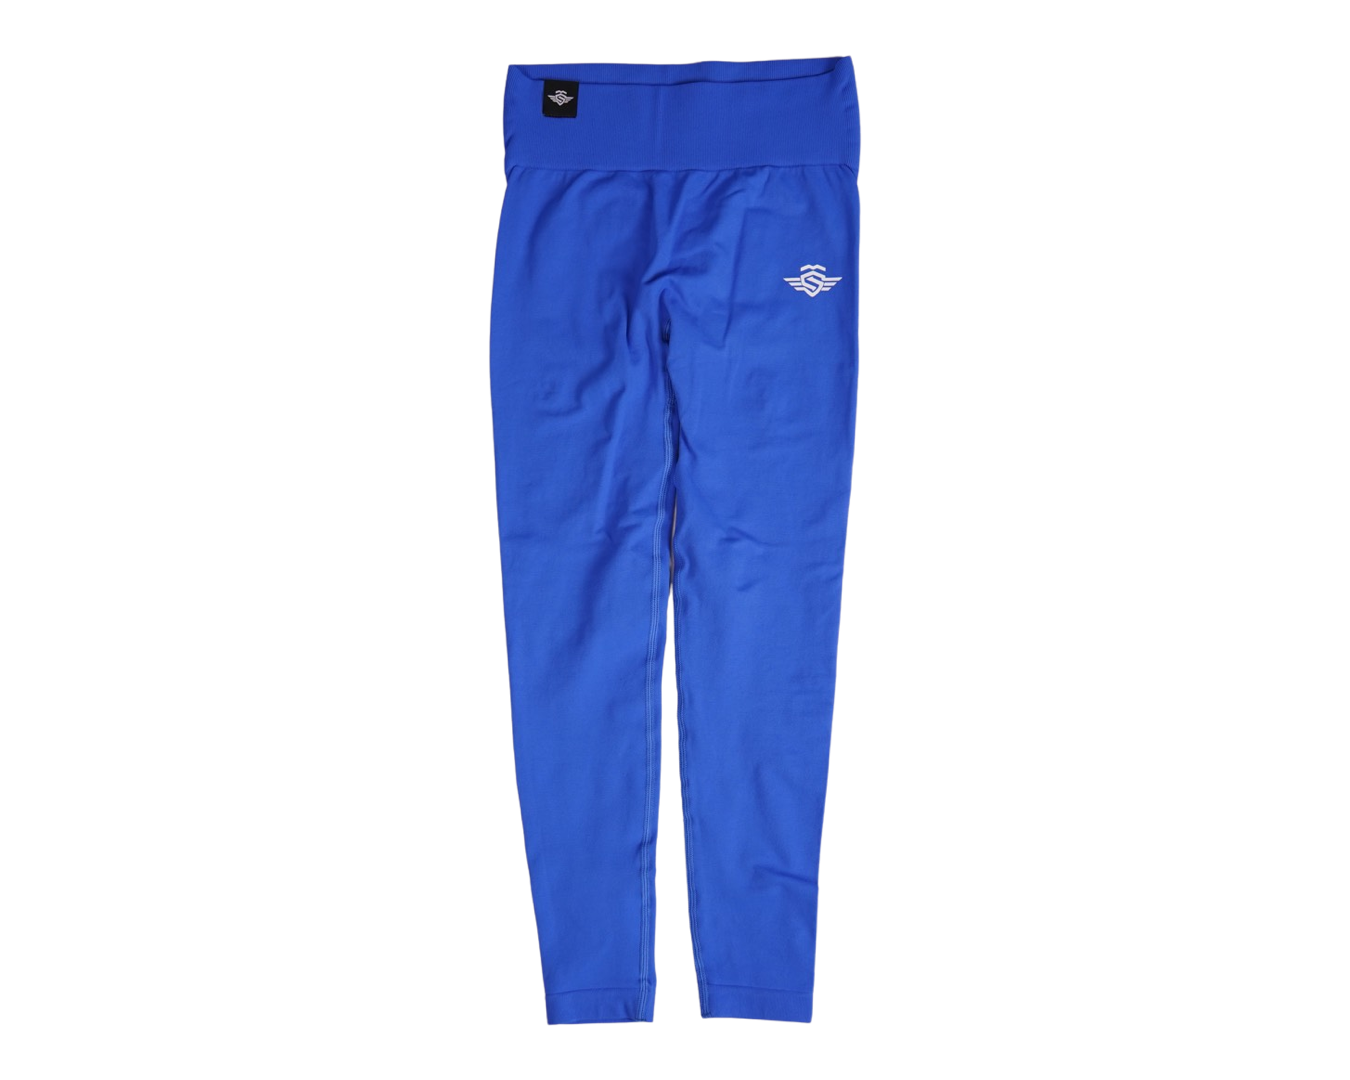 Solid blue scrunch leggings 